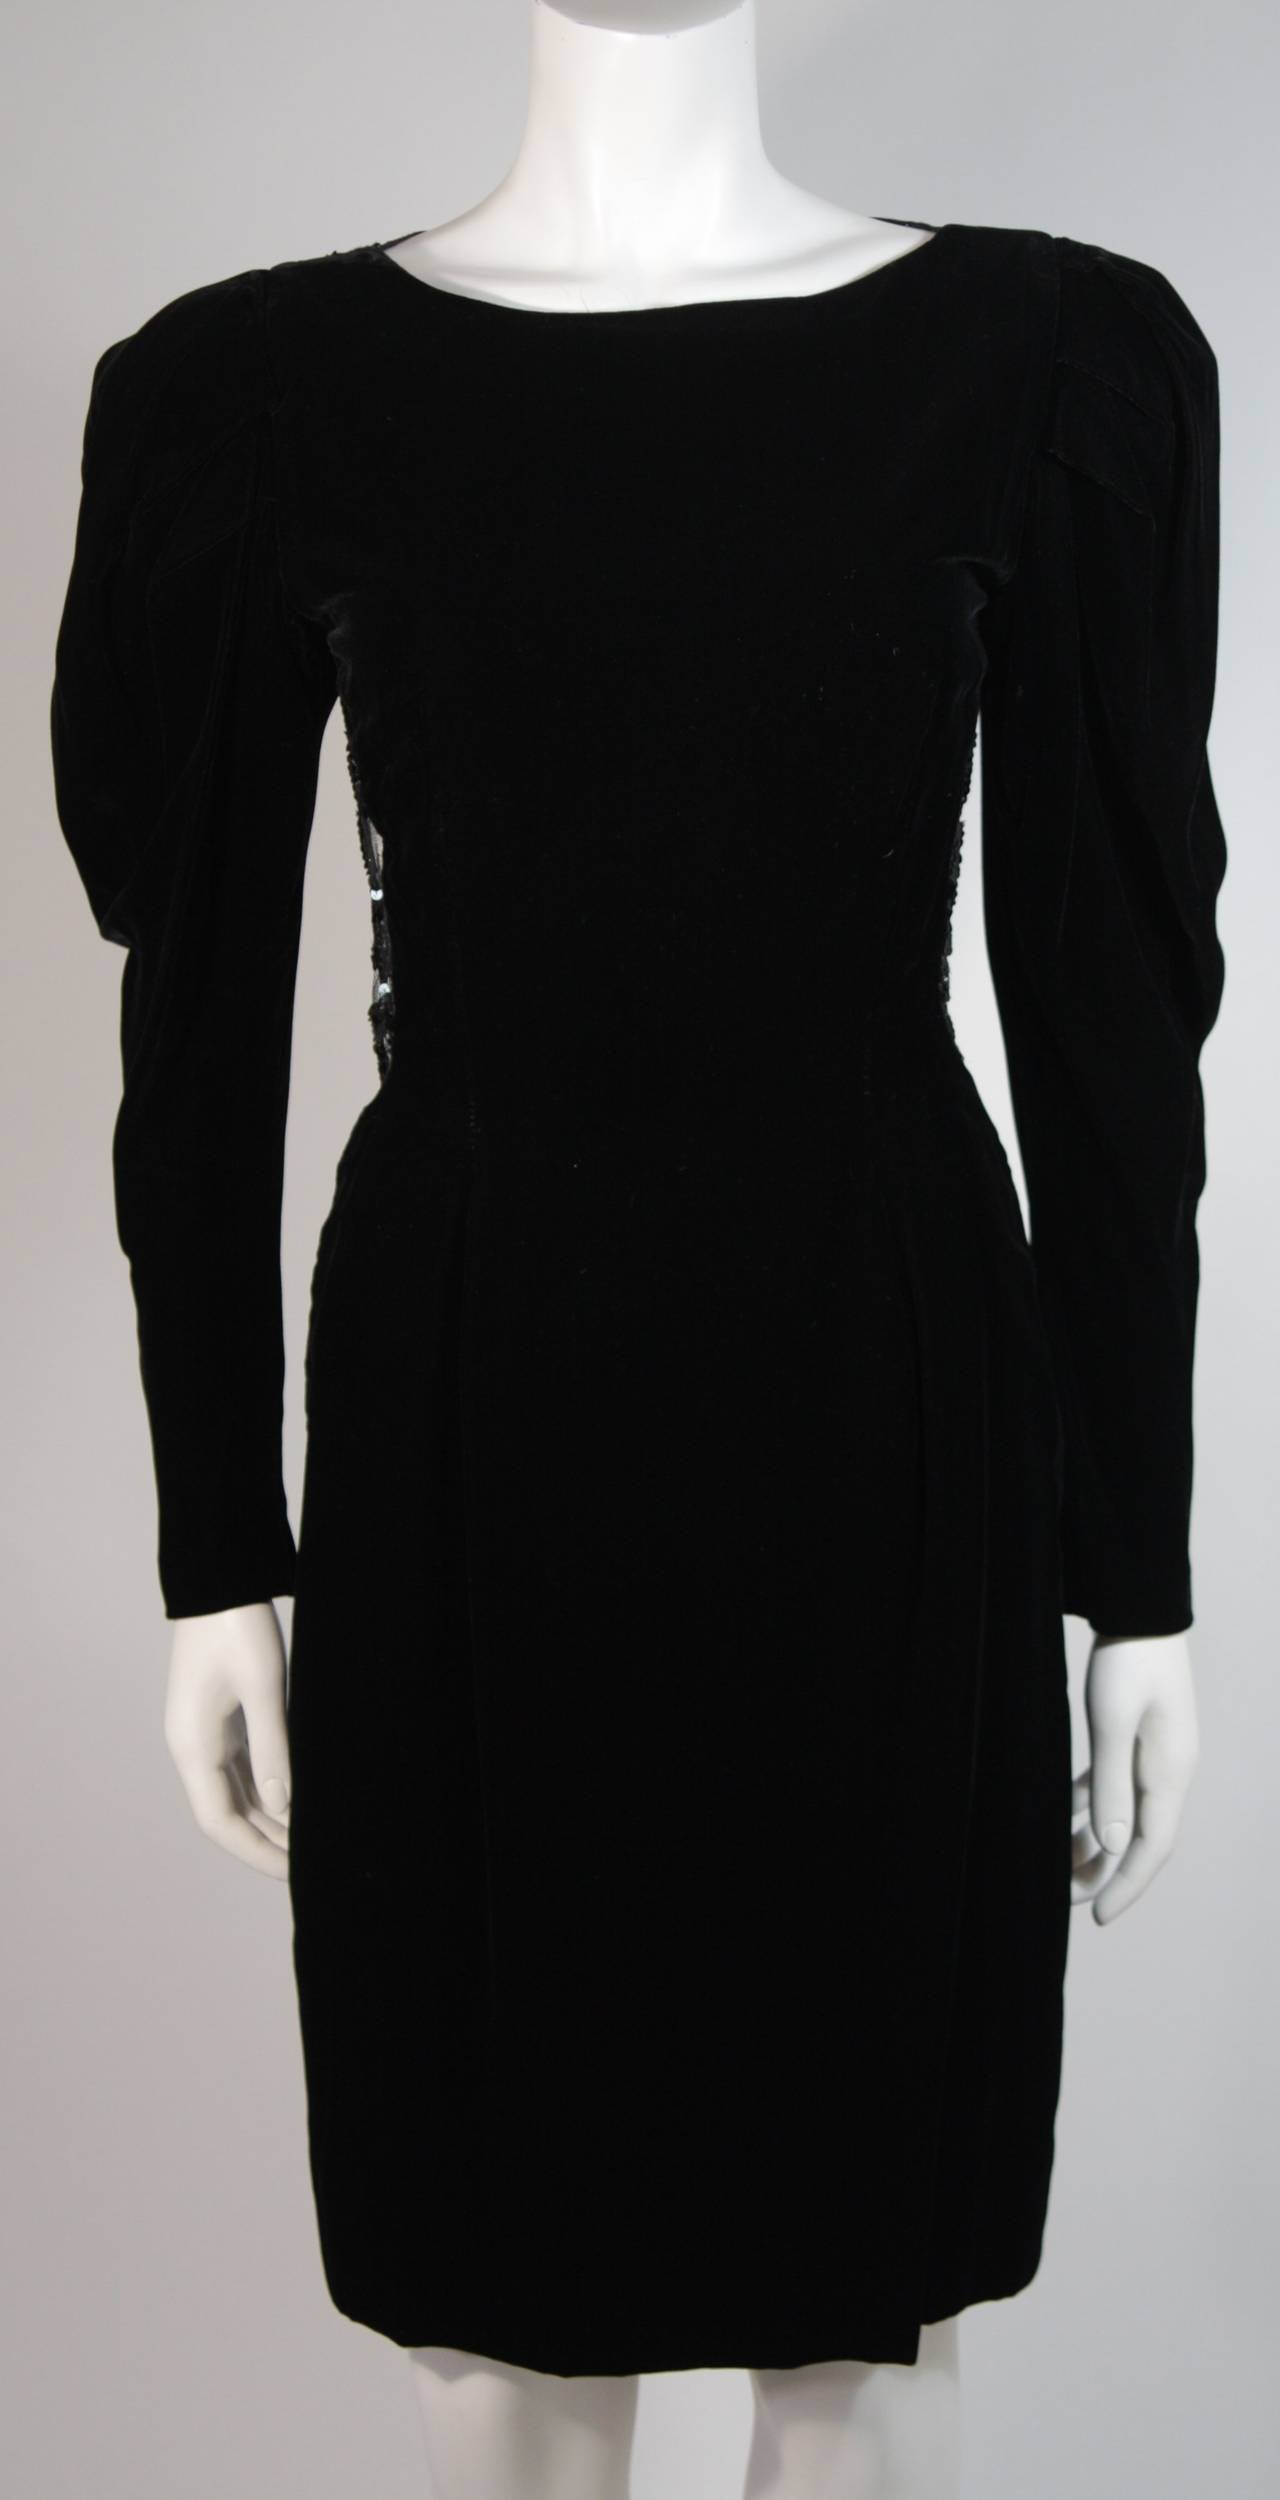 Women's Vicky Tiel Black Velvet Cocktail Dress with Lace Back Size Small